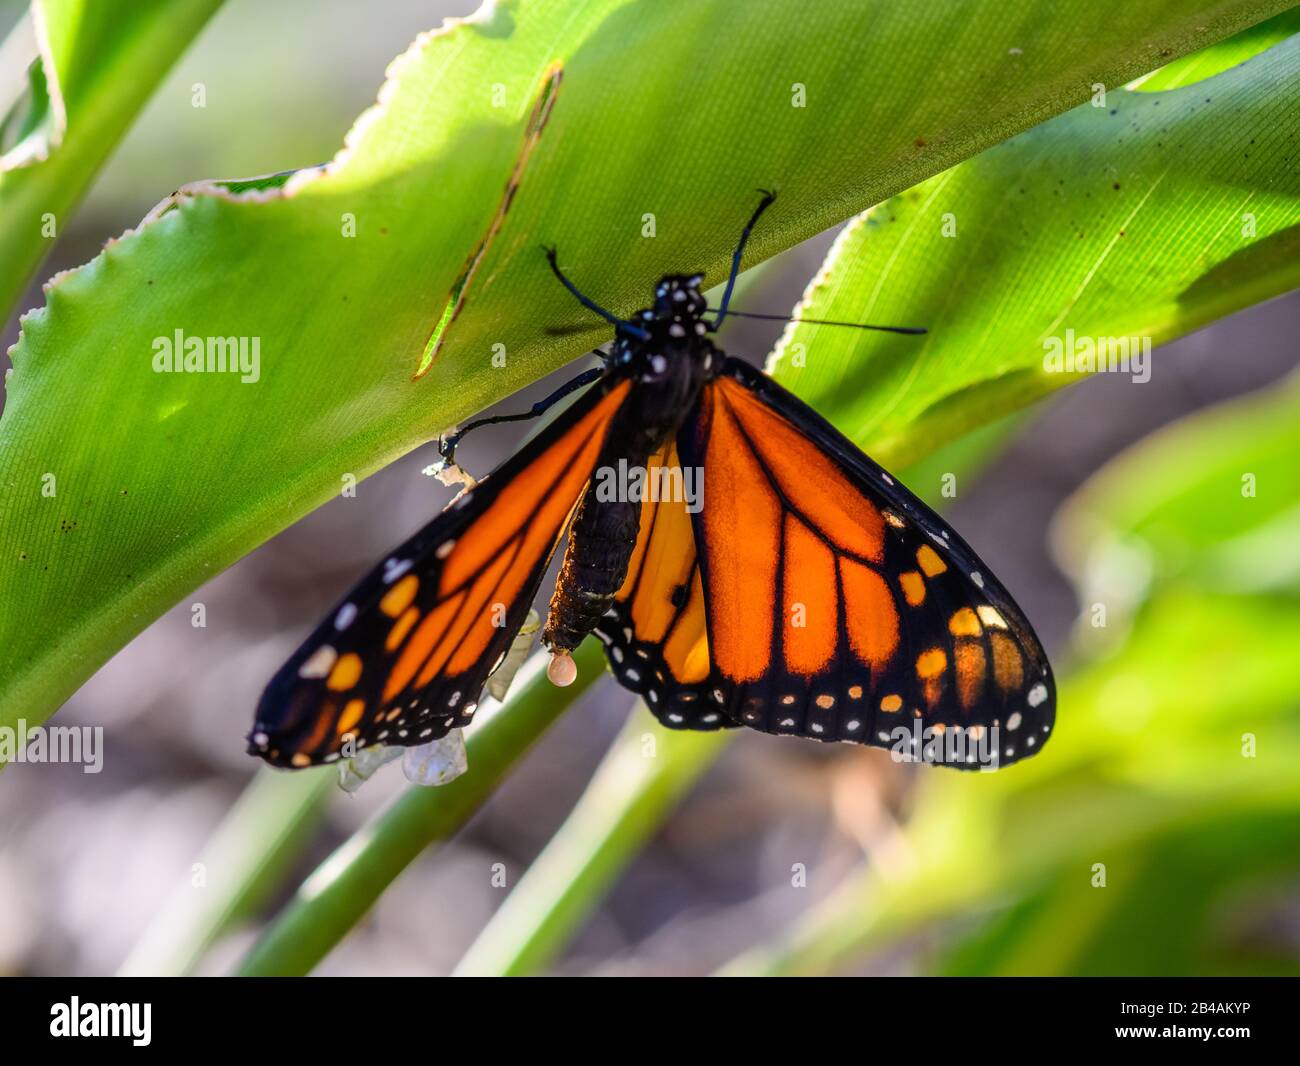 Mariposa monarca recién emergida (Danaus plexippus) de crisálida. Houston, Texas, EE.UU. Foto de stock